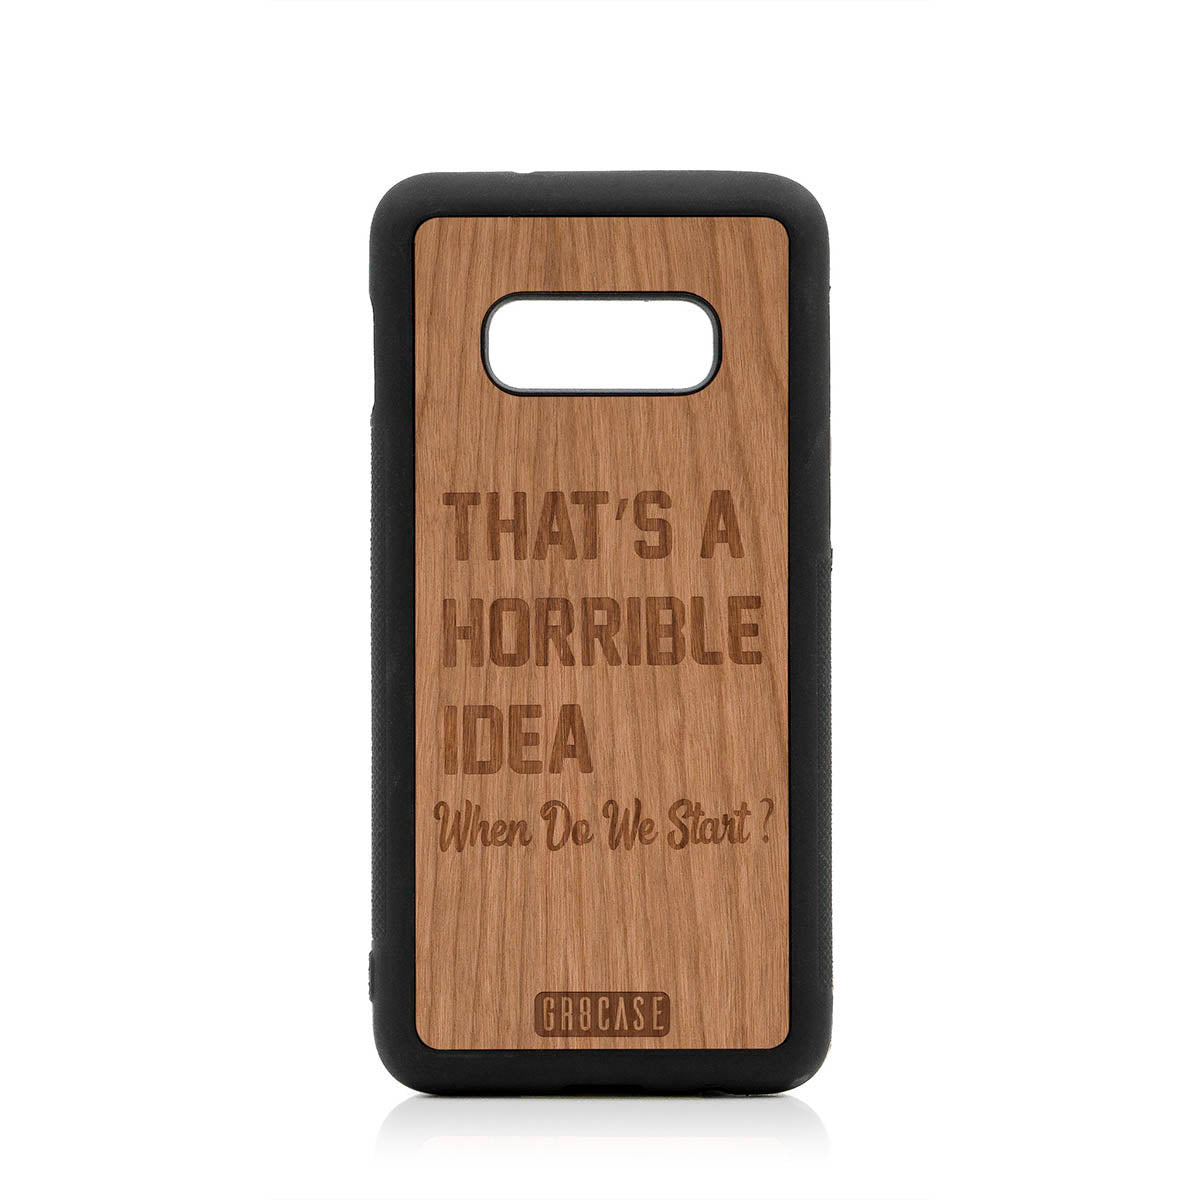 That's A Horrible Idea When Do We Start? Design Wood Case For Samsung Galaxy S10E